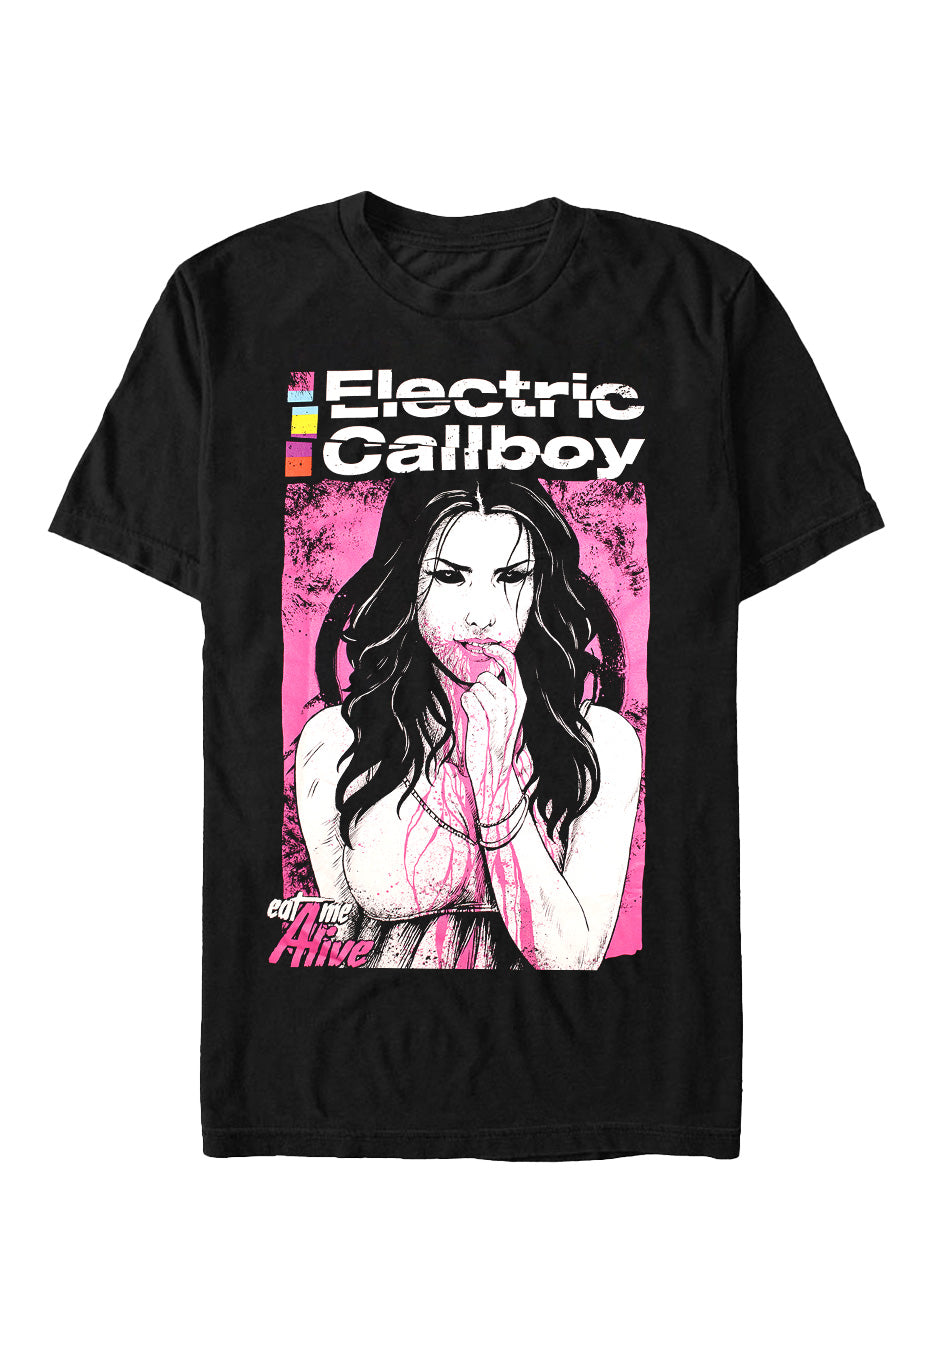 Electric Callboy - Eat Me Alive - T-Shirt